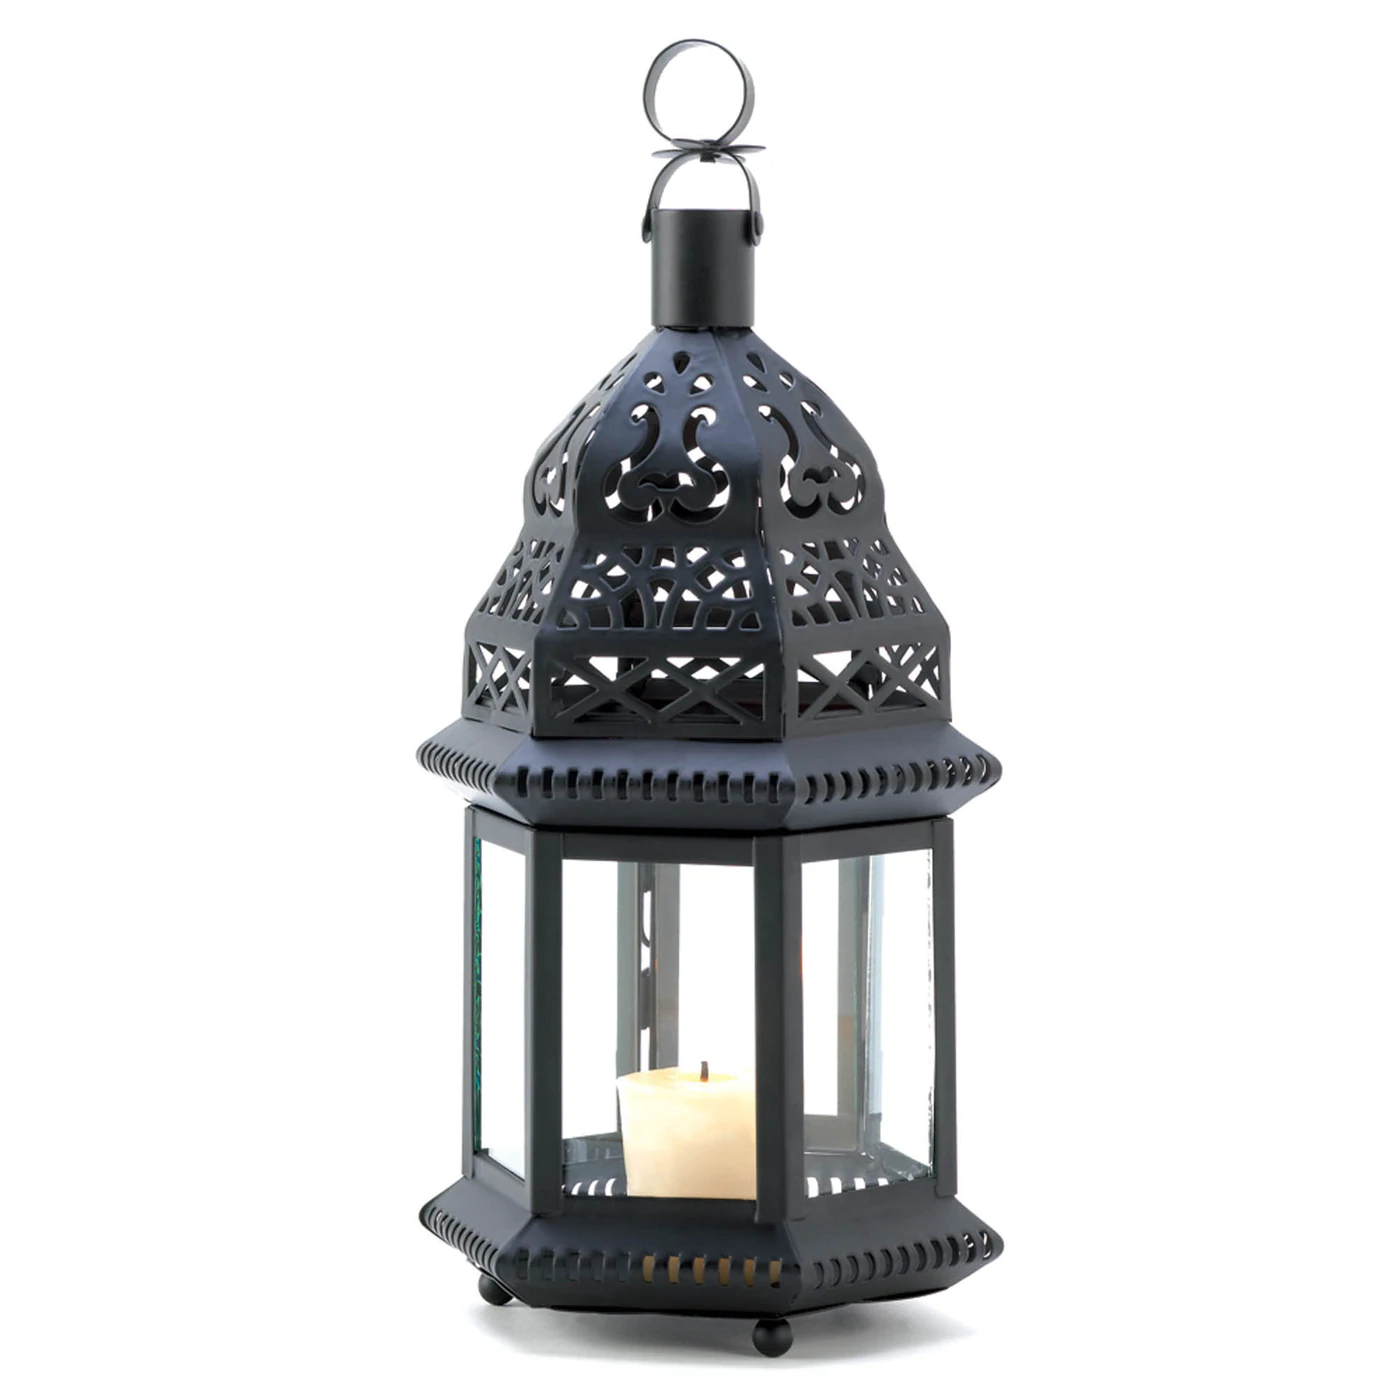 Moroccan Birdcage Lantern - $27.60